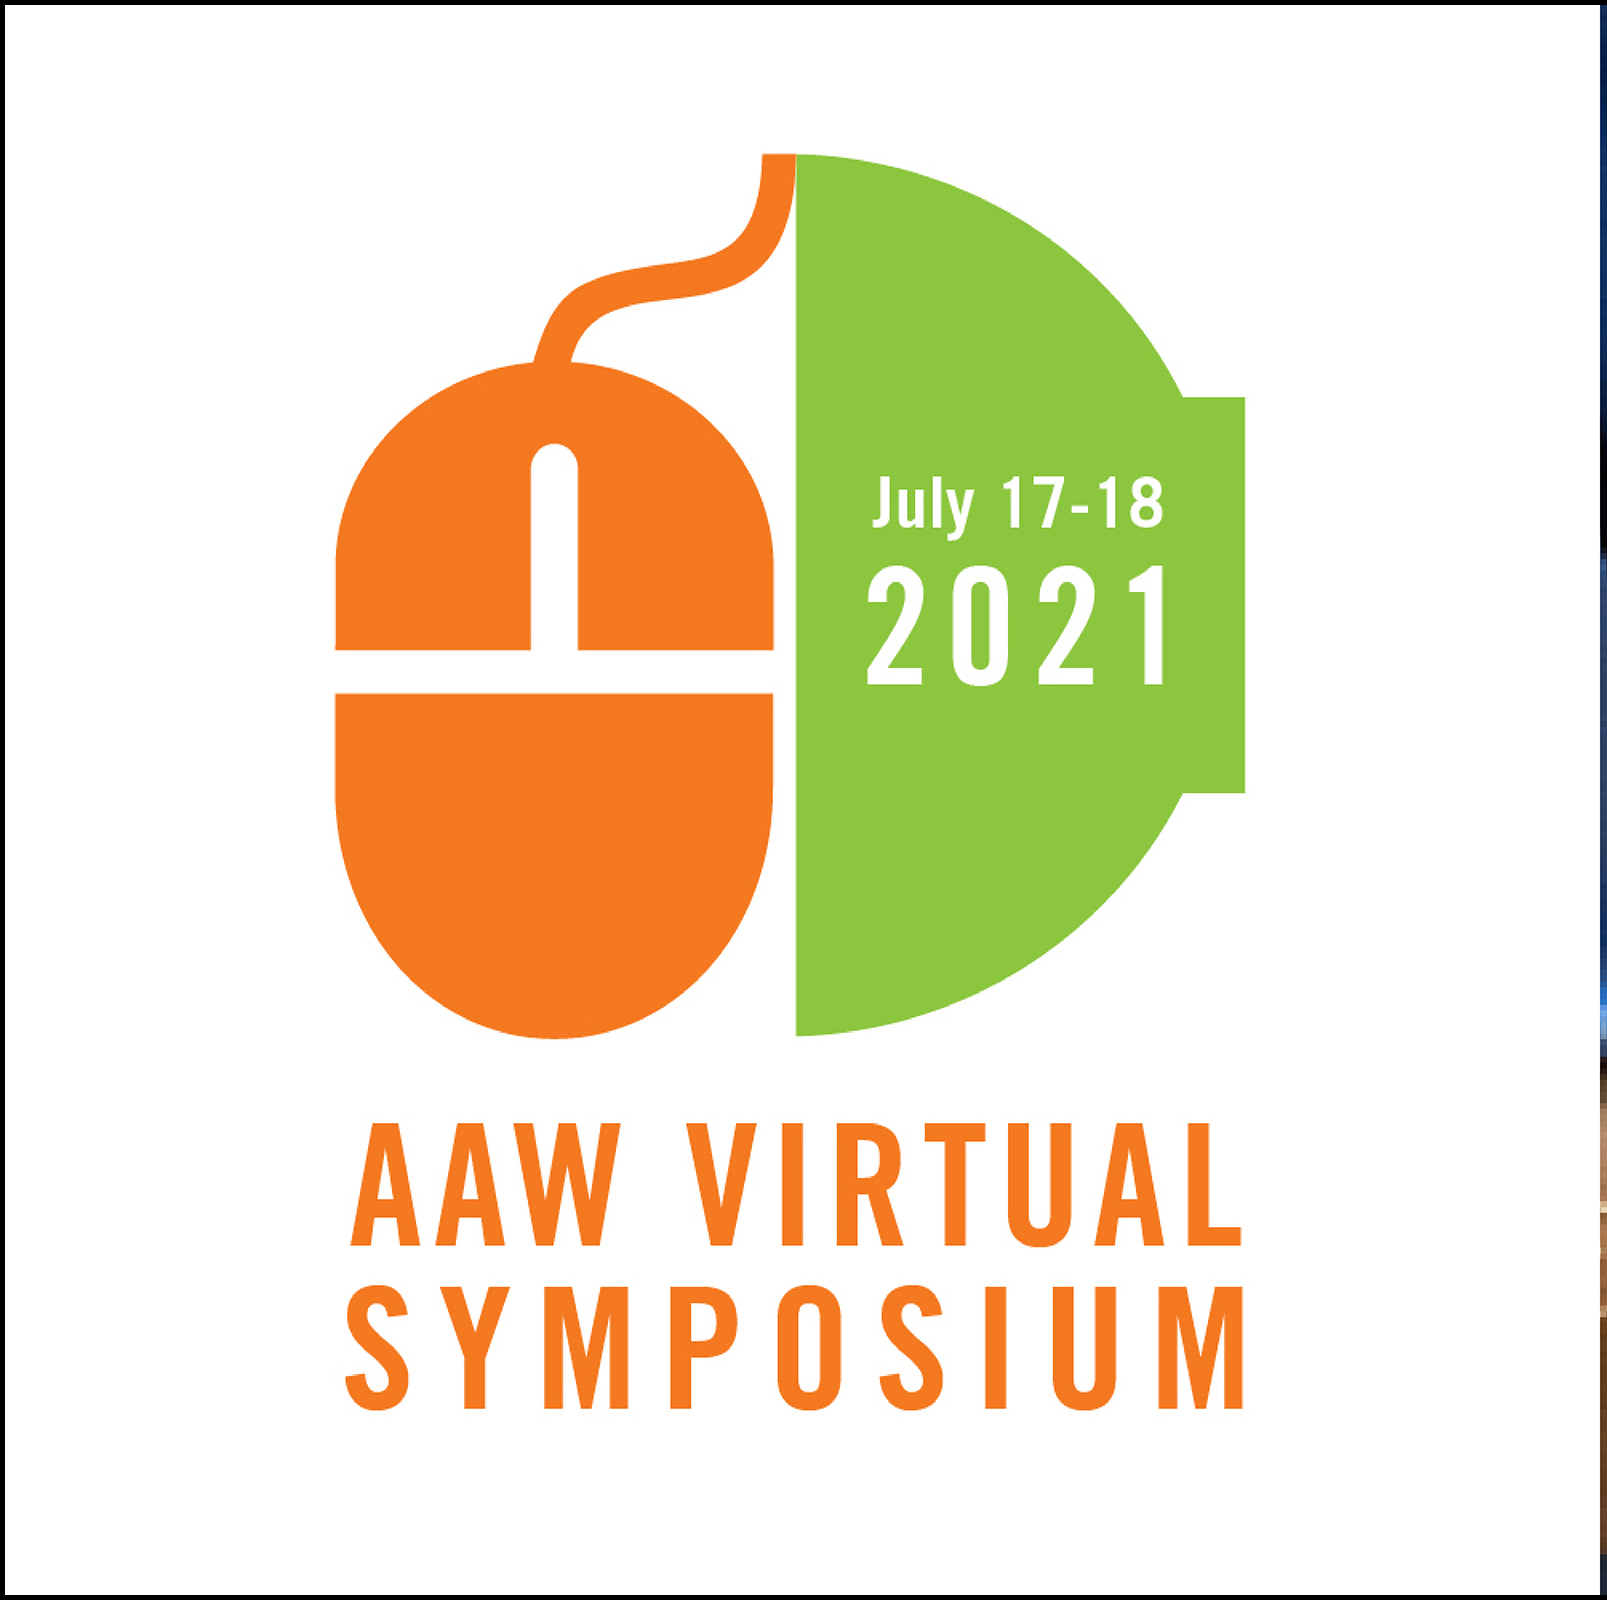 AAW symposium